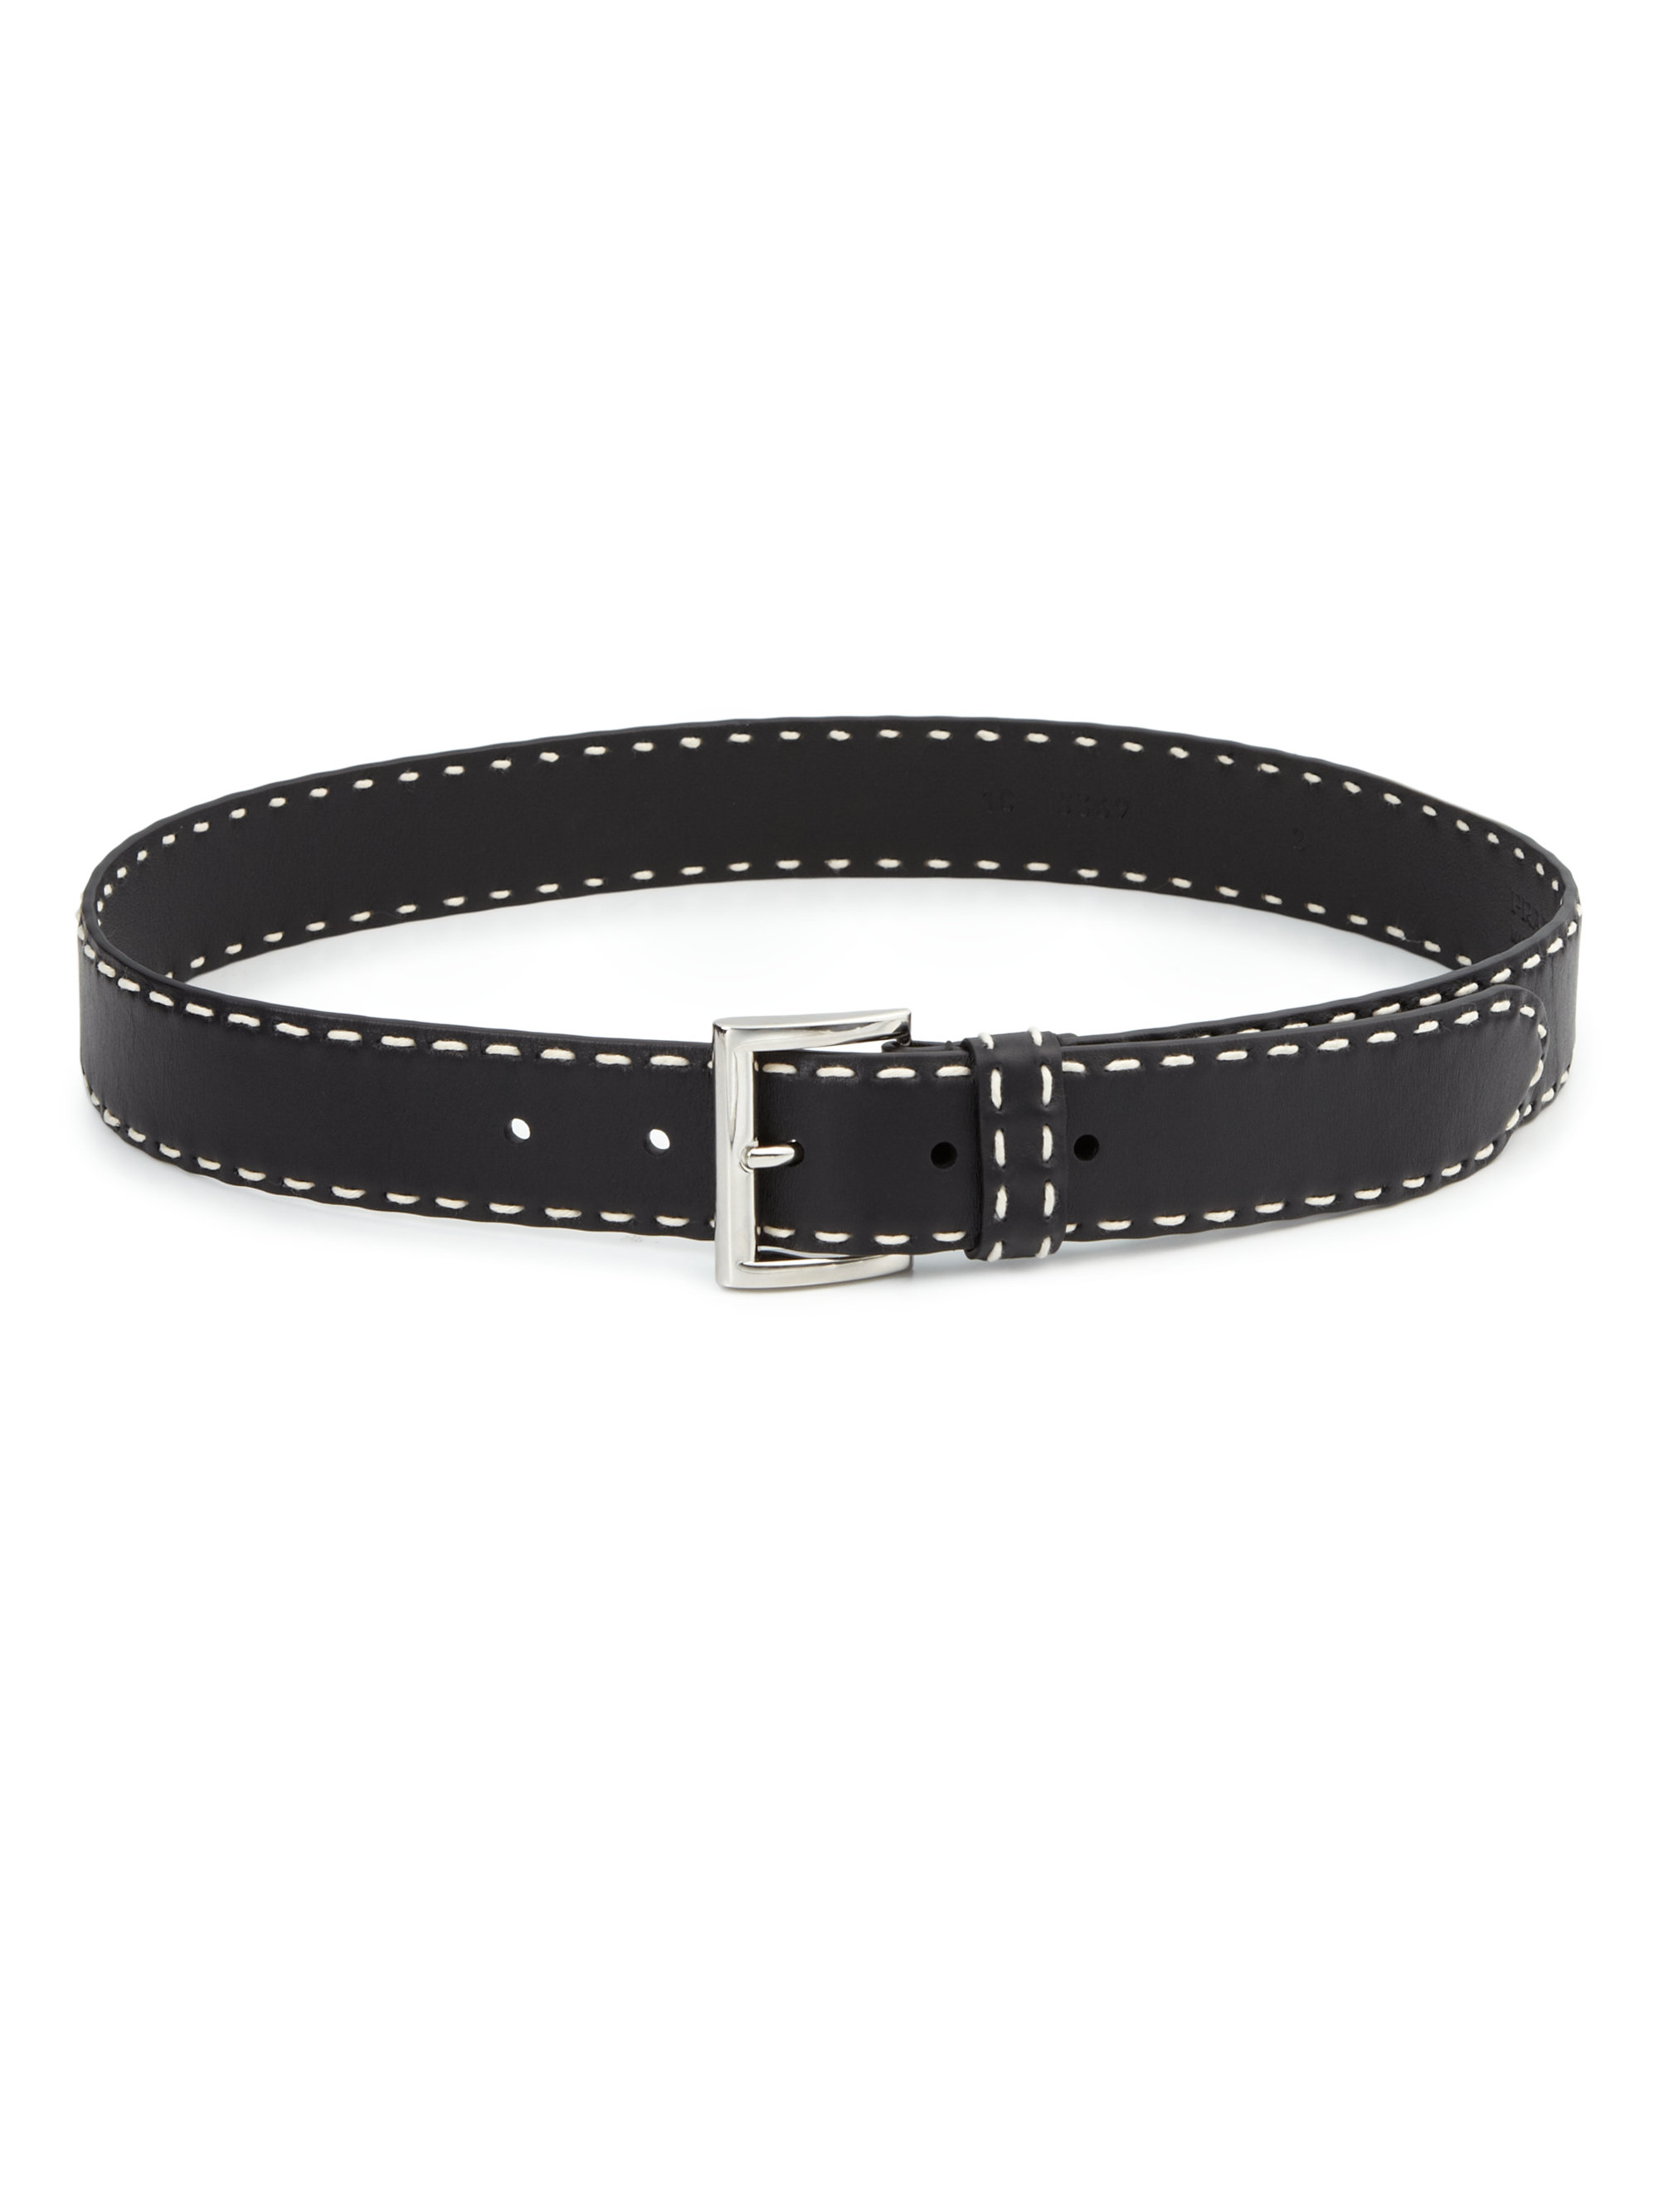 Prada Contrast-stitched Leather Belt in Black | Lyst  